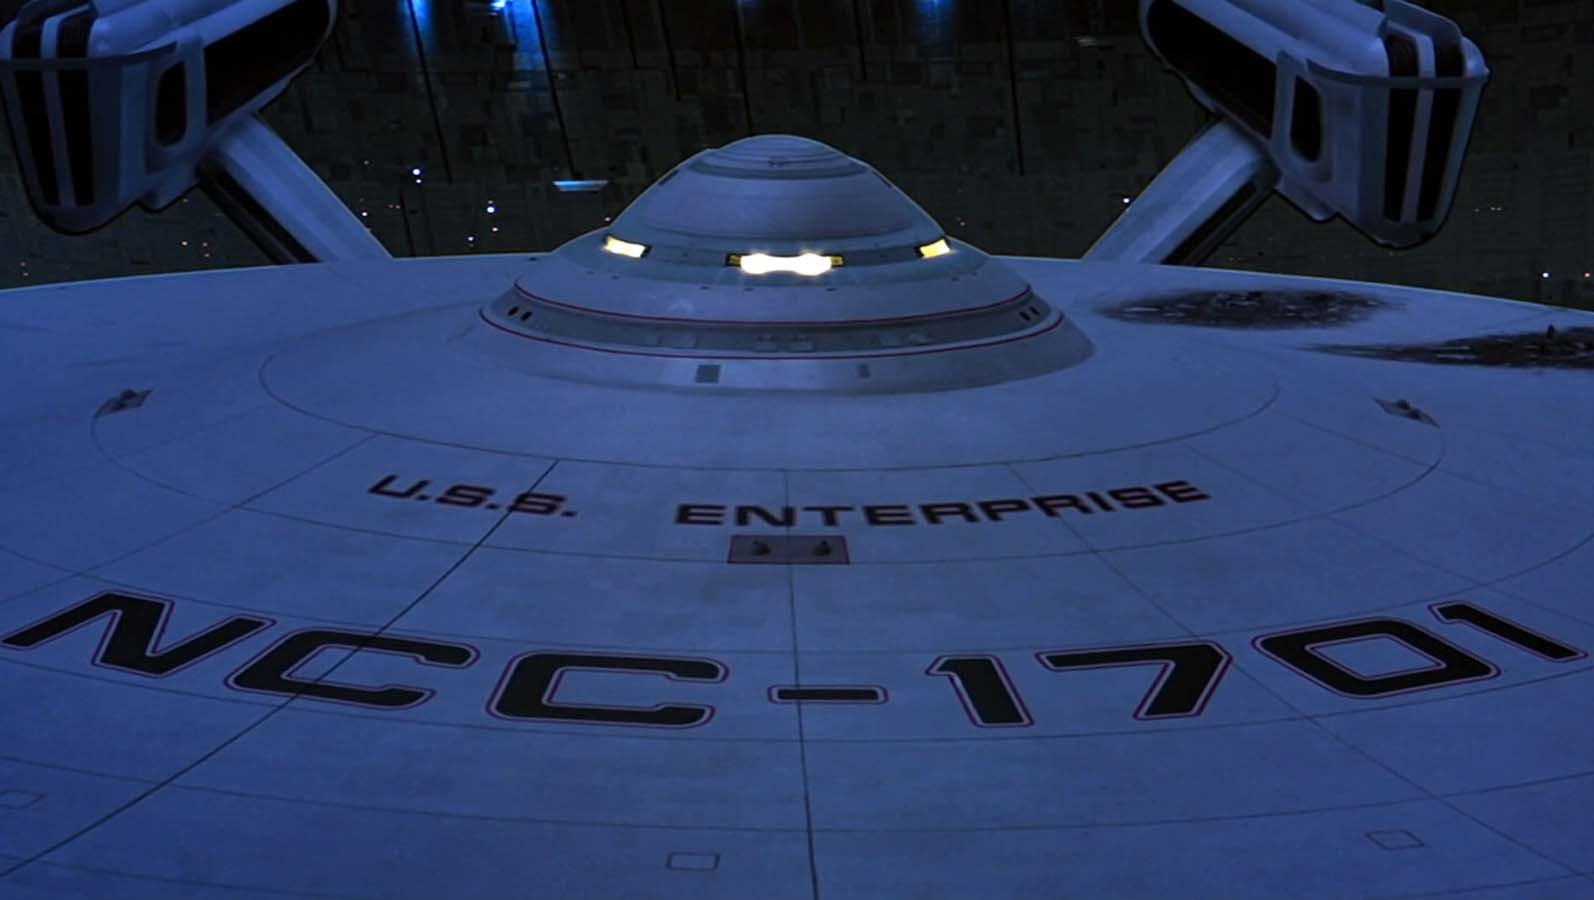 General 1594x900 Star Trek science fiction movies film stills vehicle USS Enterprise NCC-1701 spaceship Star Trek Ships